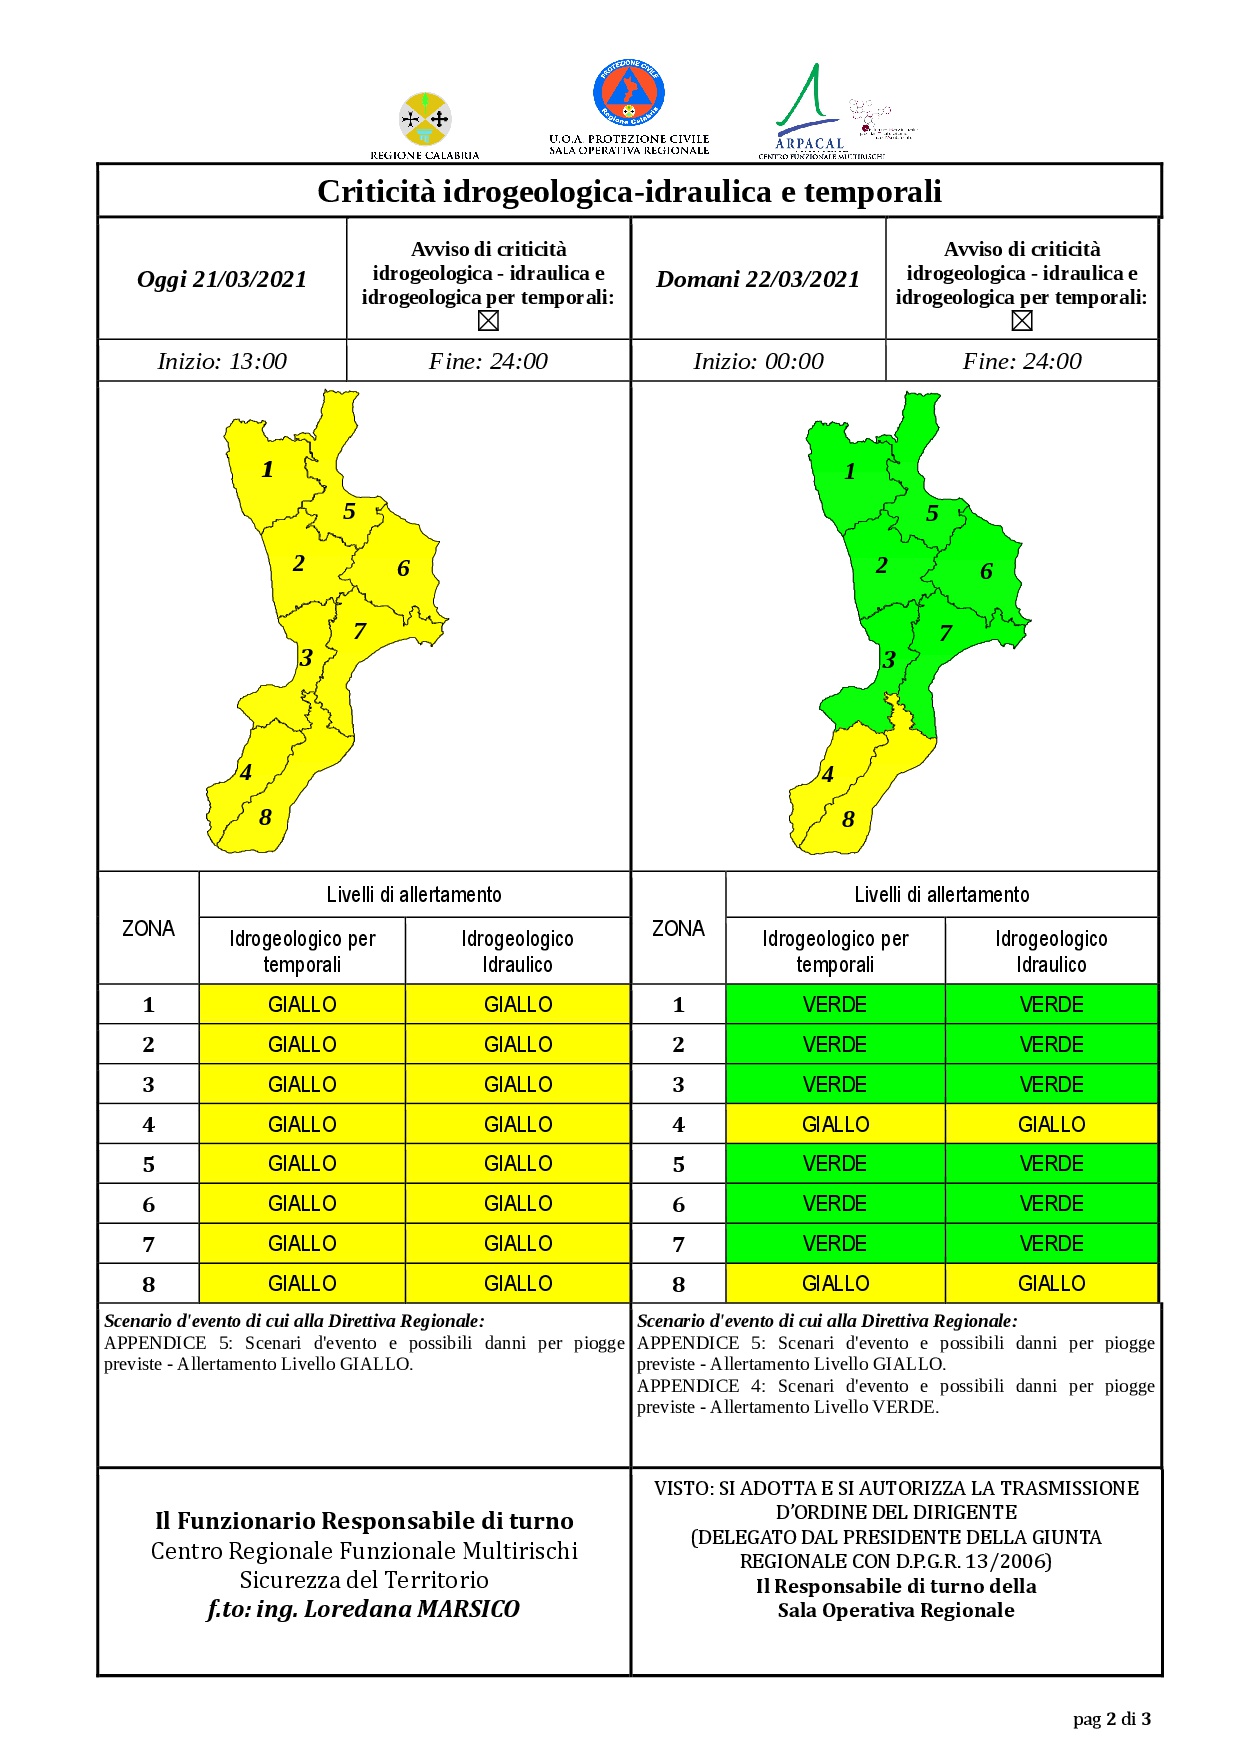 Criticità idrogeologica-idraulica e temporali in Calabria 21-03-2021